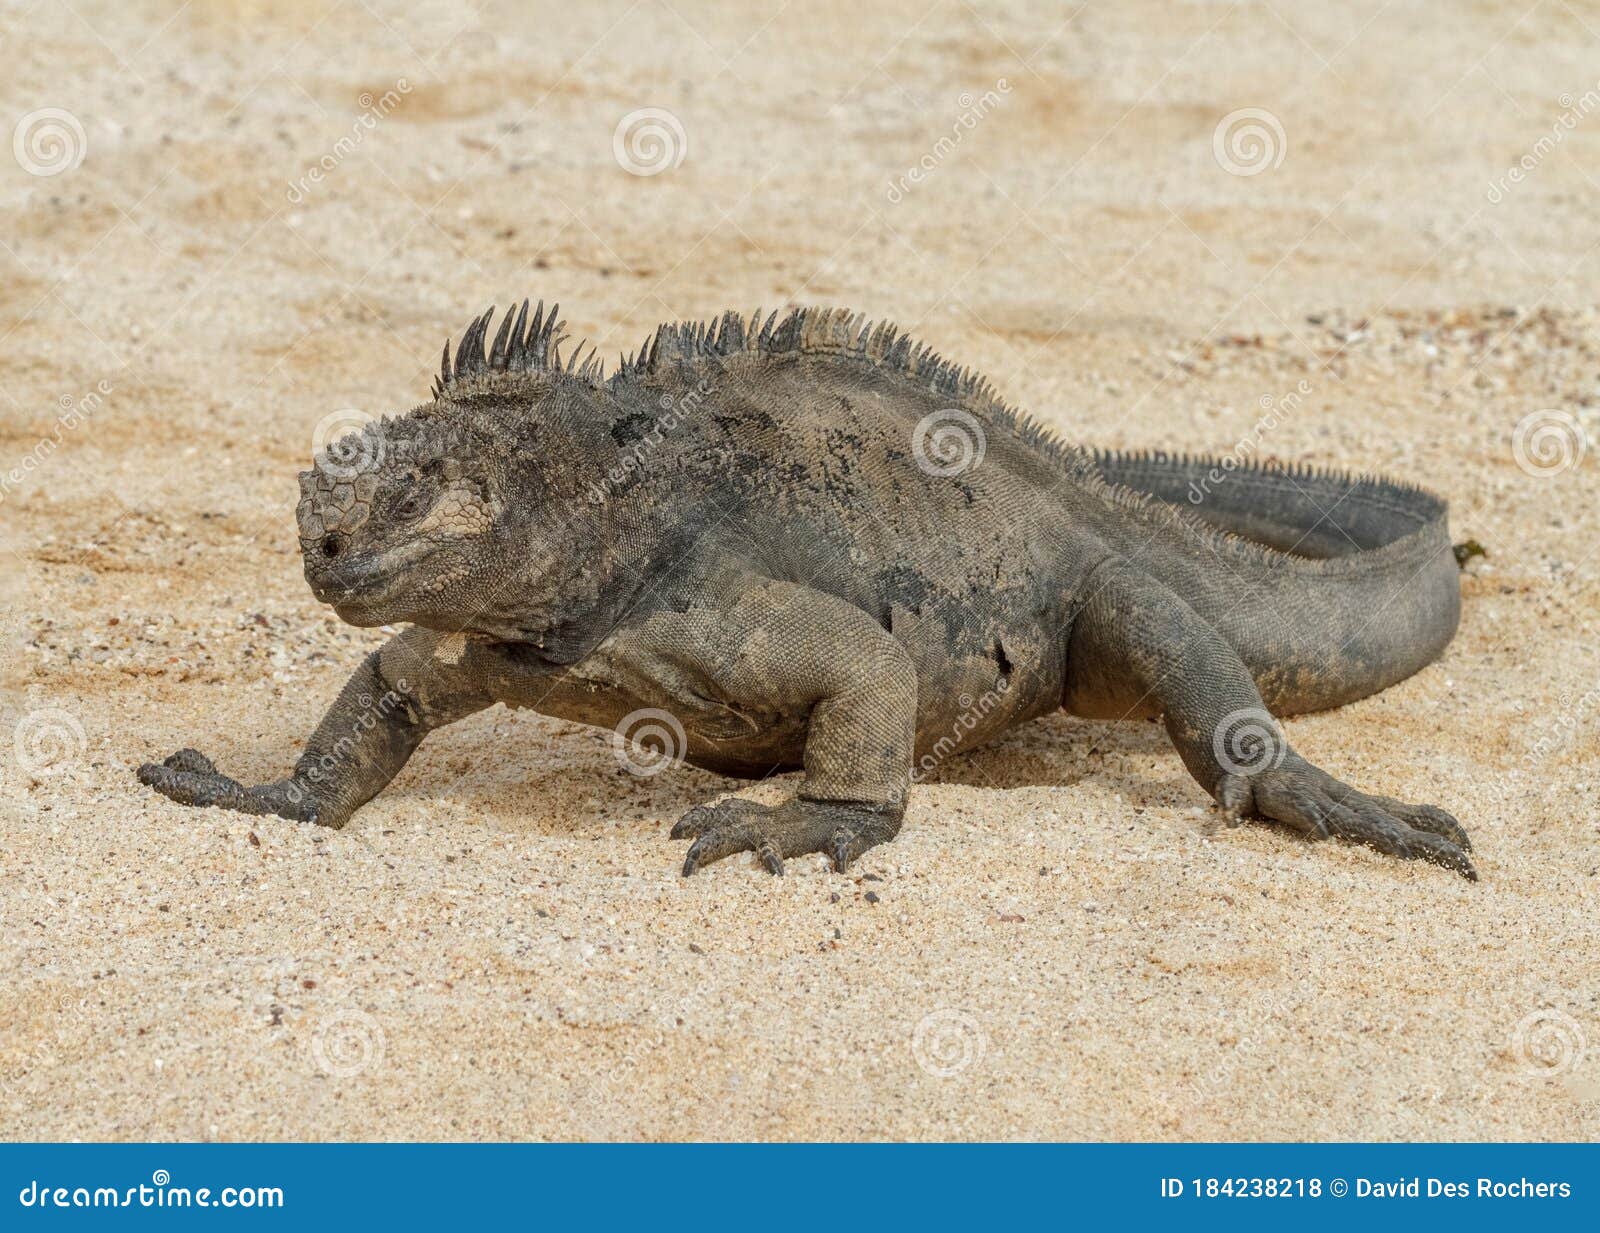 marine iguana amblyrhynchus cristatus galÃÂ¡pagos islands